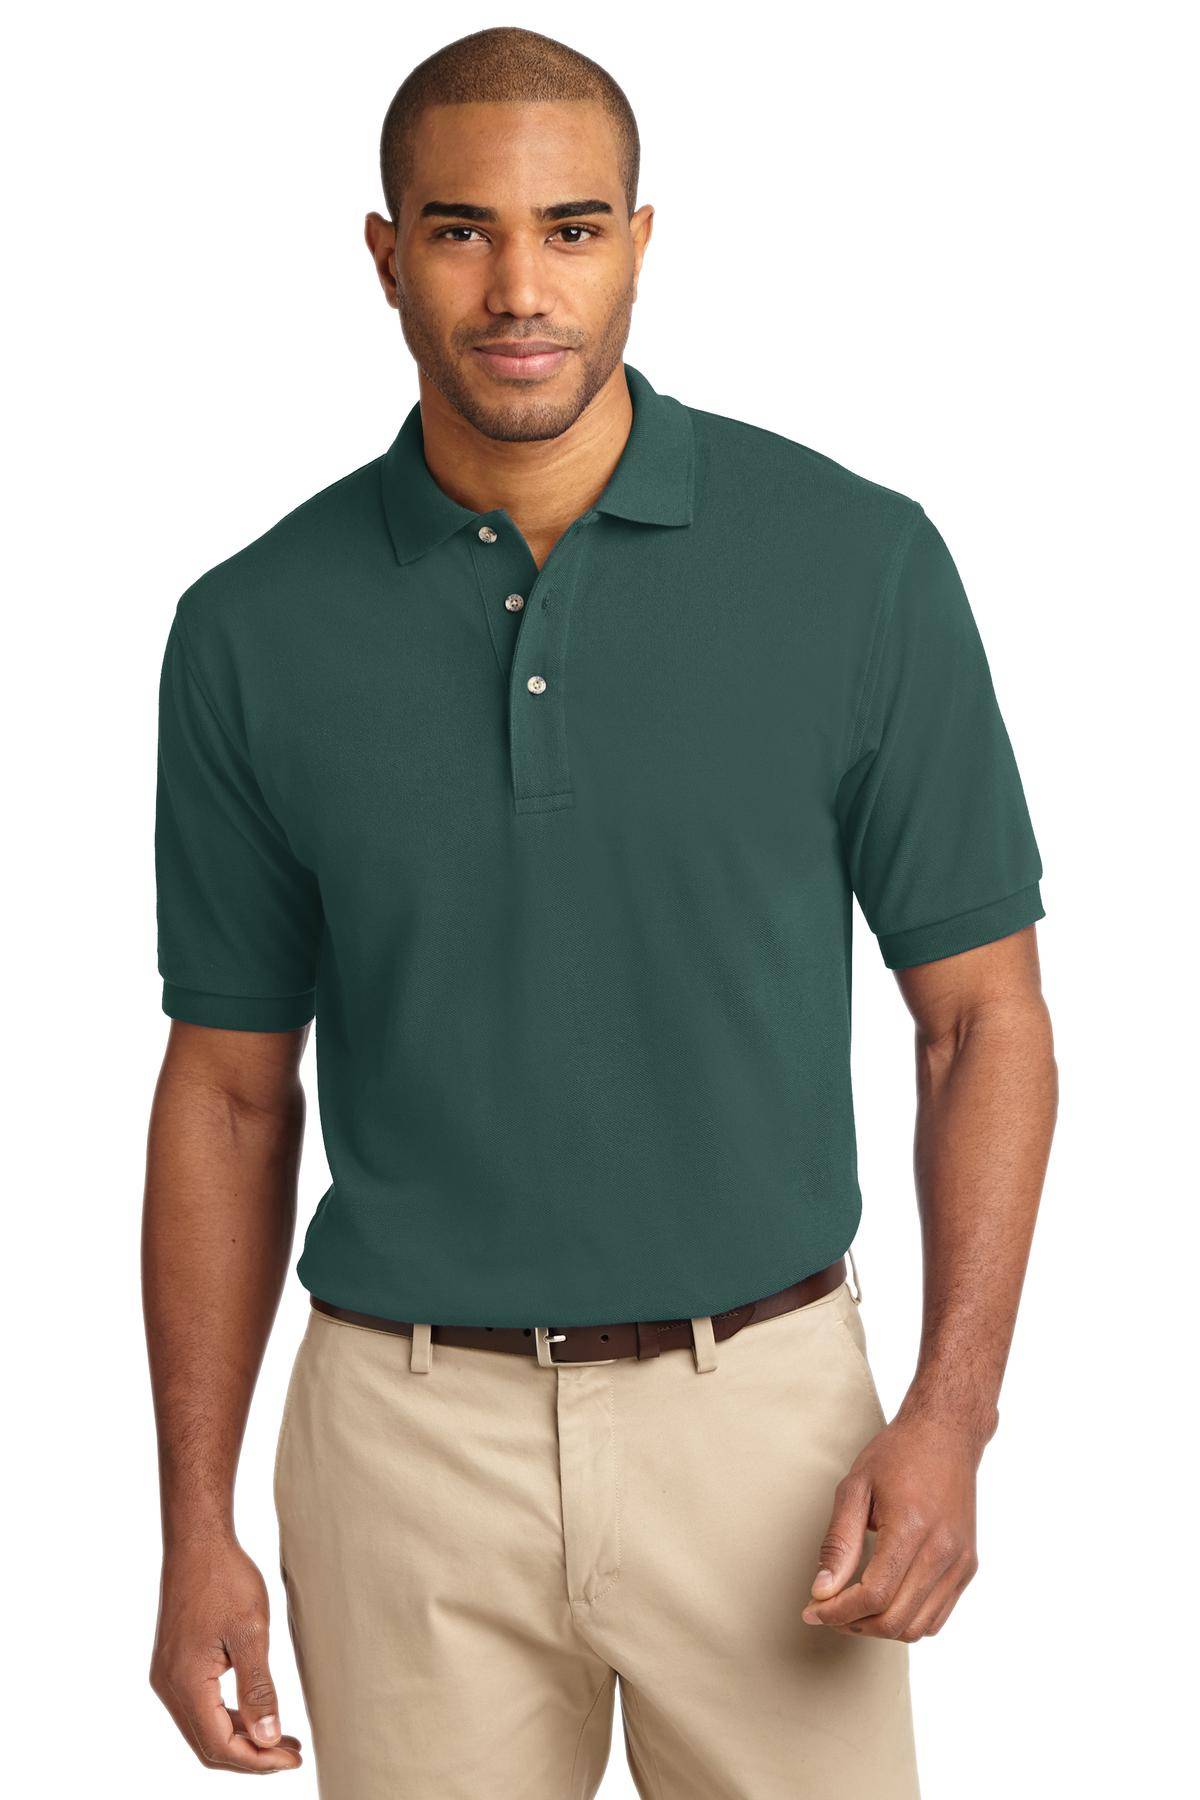 Port Authority K420 Mens Short Sleeve Shrink Resistant Heavyweight Cotton Pique Polo Shirt